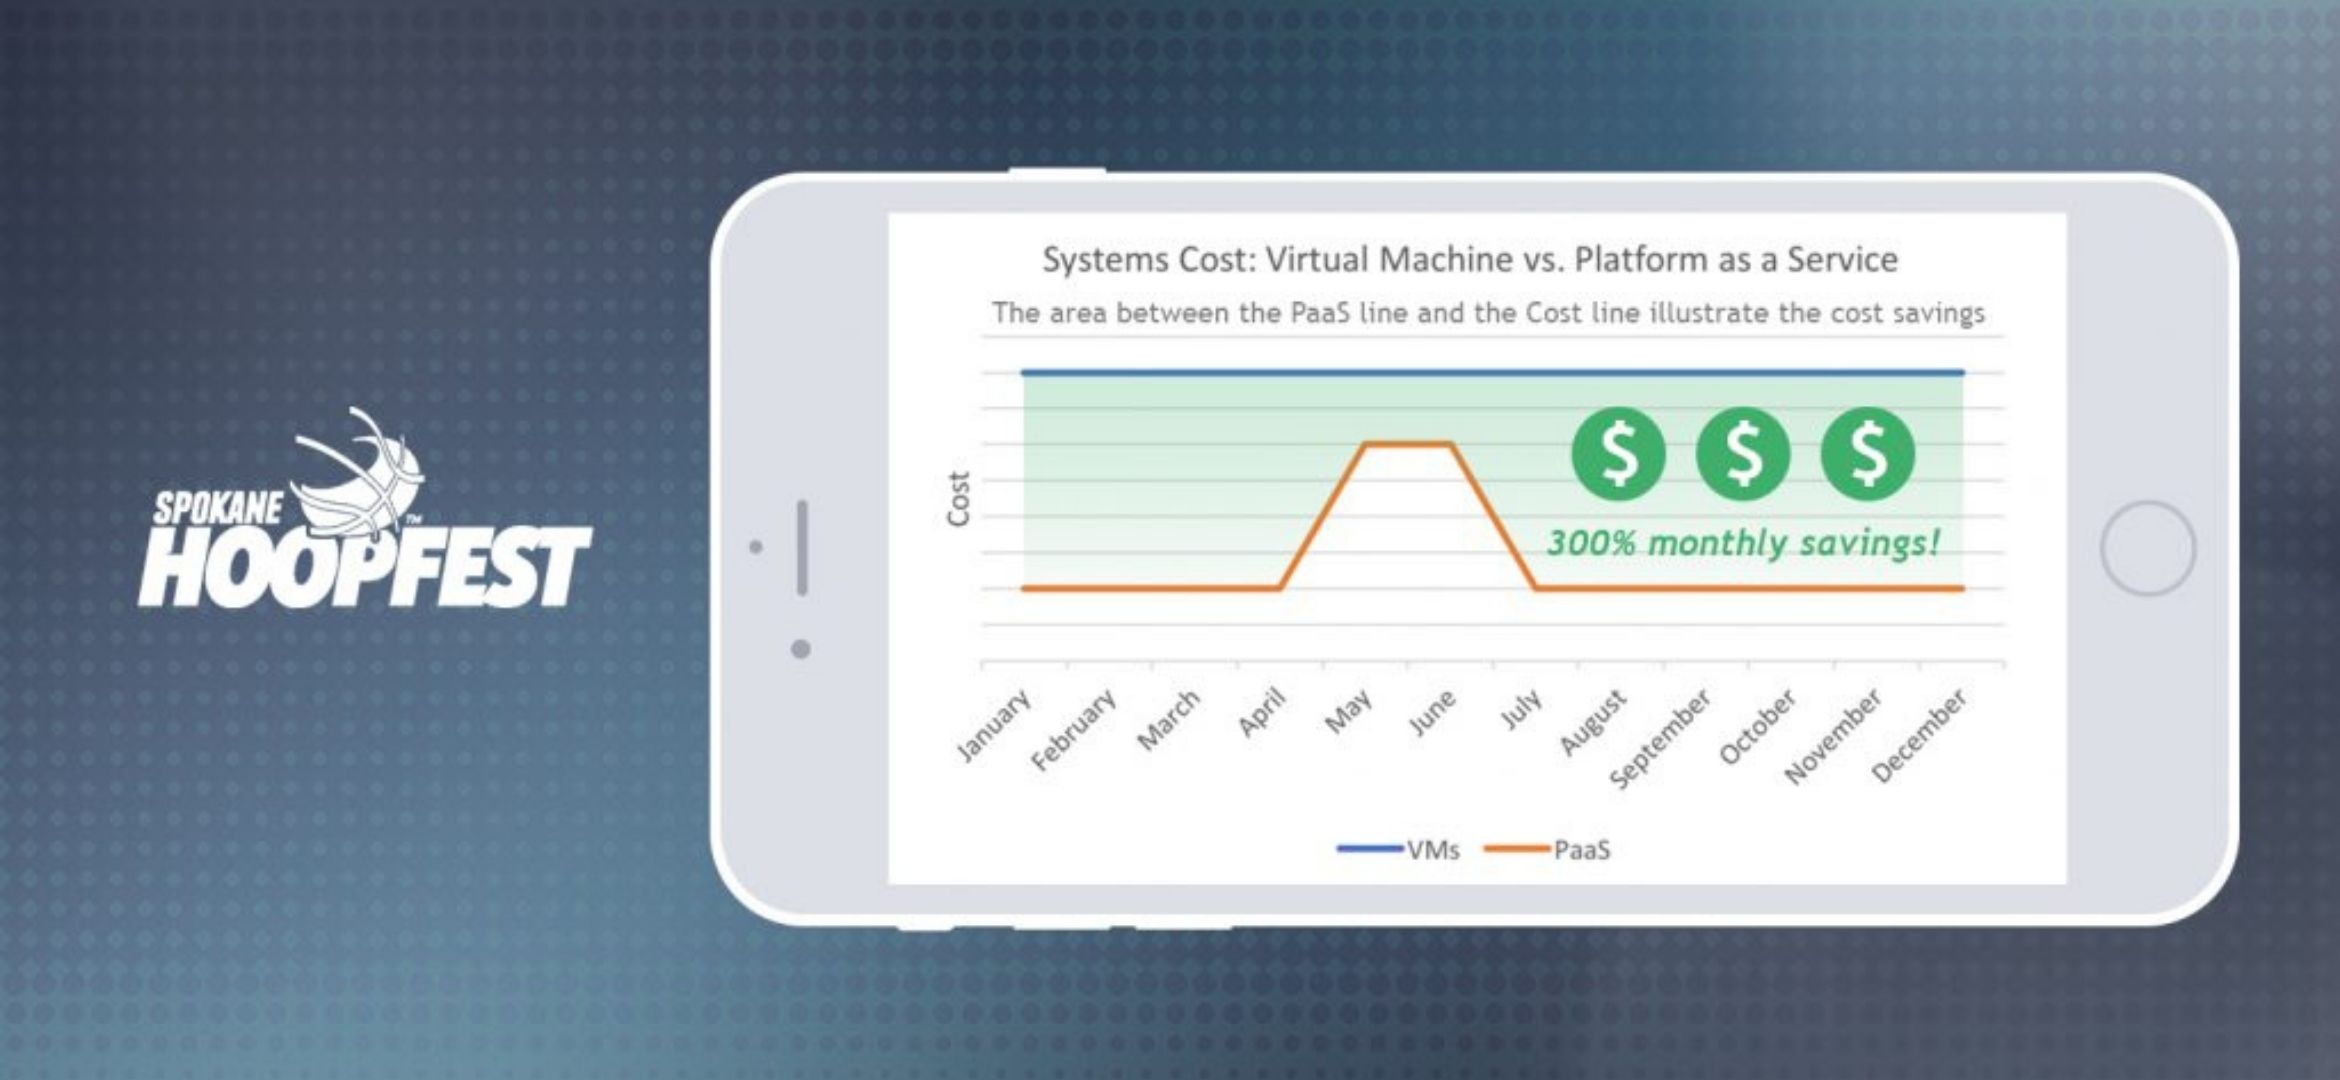 Spokane Hoopfest Case study graphic showing money saved using a virtual machine